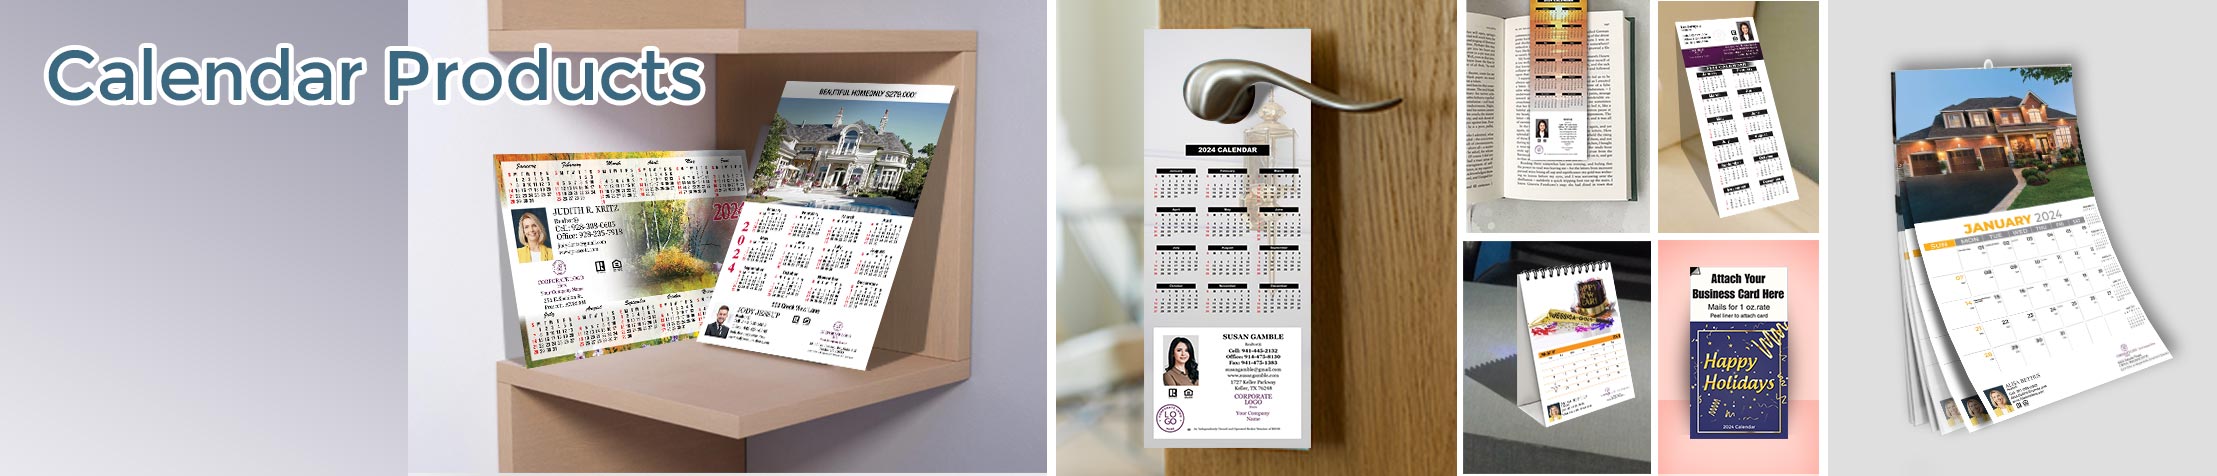 Berkshire Hathaway Real Estate Calendar Products - Berkshire Hathaway  2019 calendars, magnets, door hangers, bookmarks, tear away note pads | BestPrintBuy.com